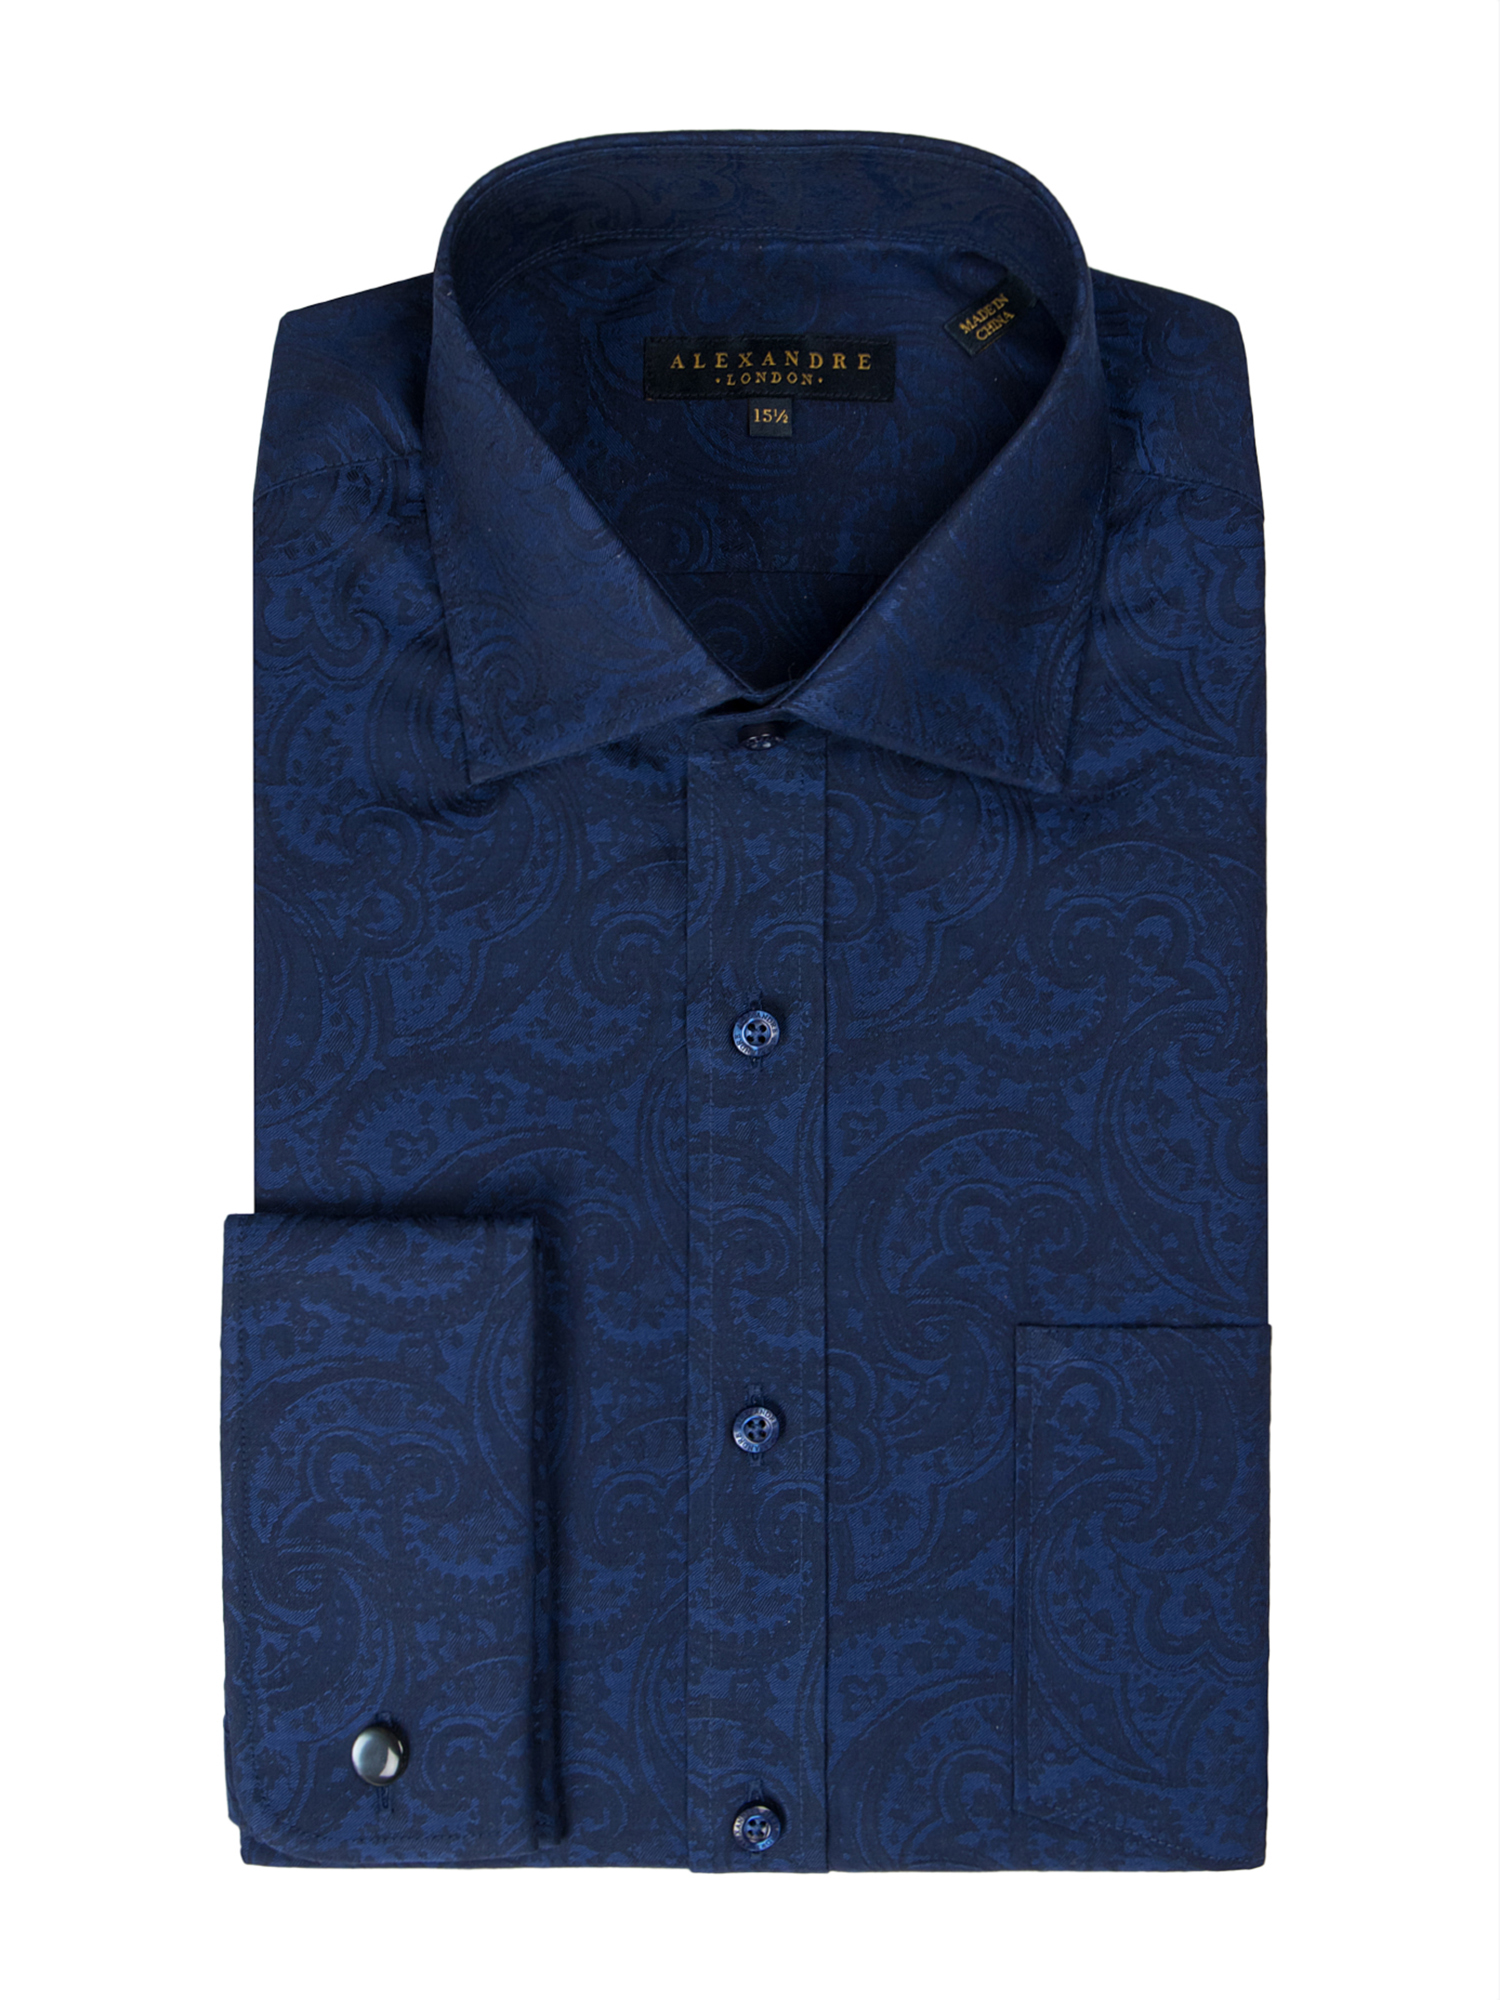 Navy Intricate Paisley Jacquard Shirt - Shirts - Alexandre London